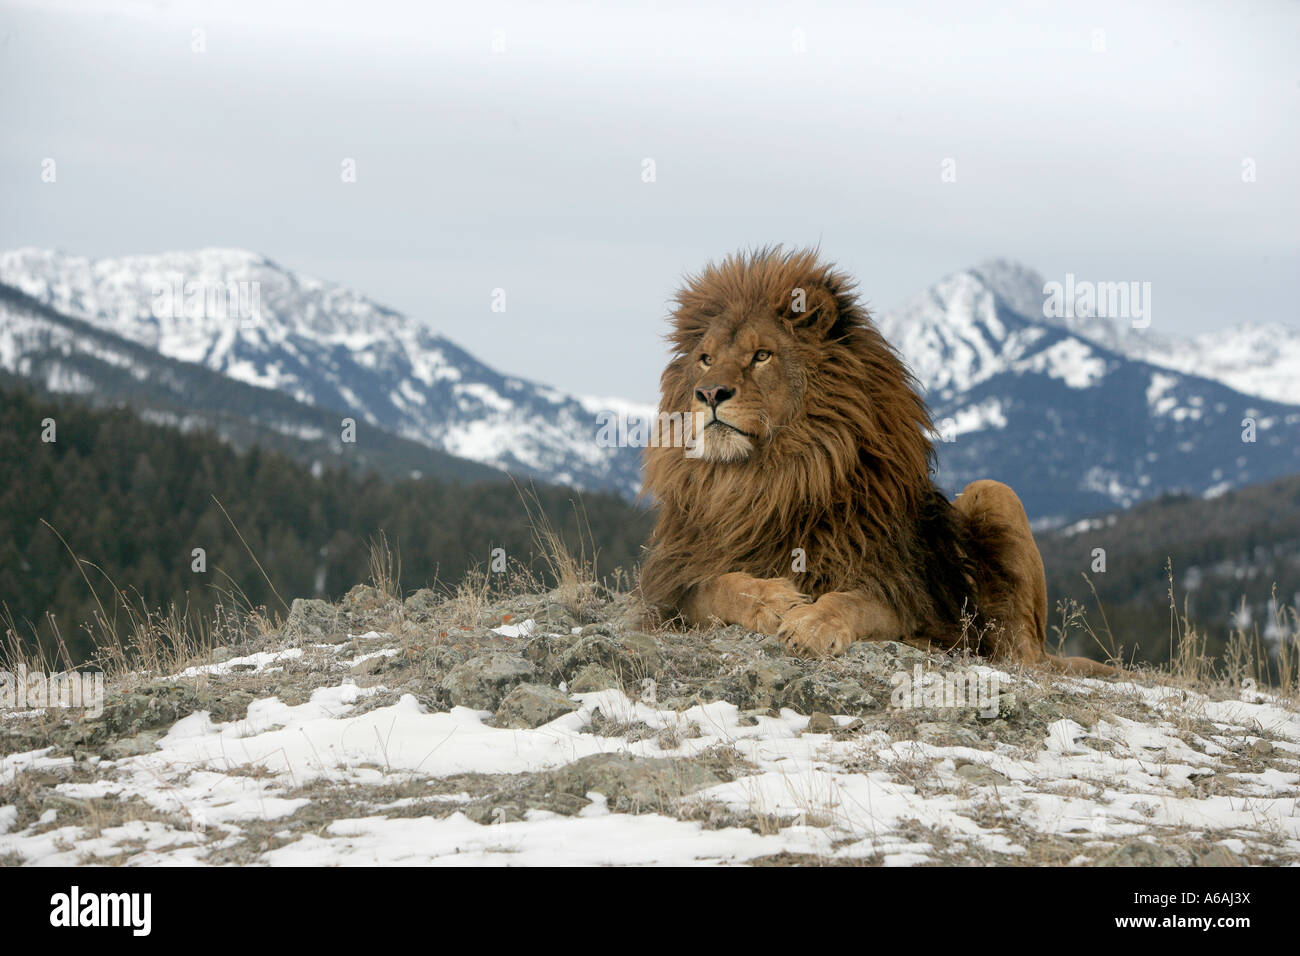 Barberia lion Panthera leo leo Foto Stock